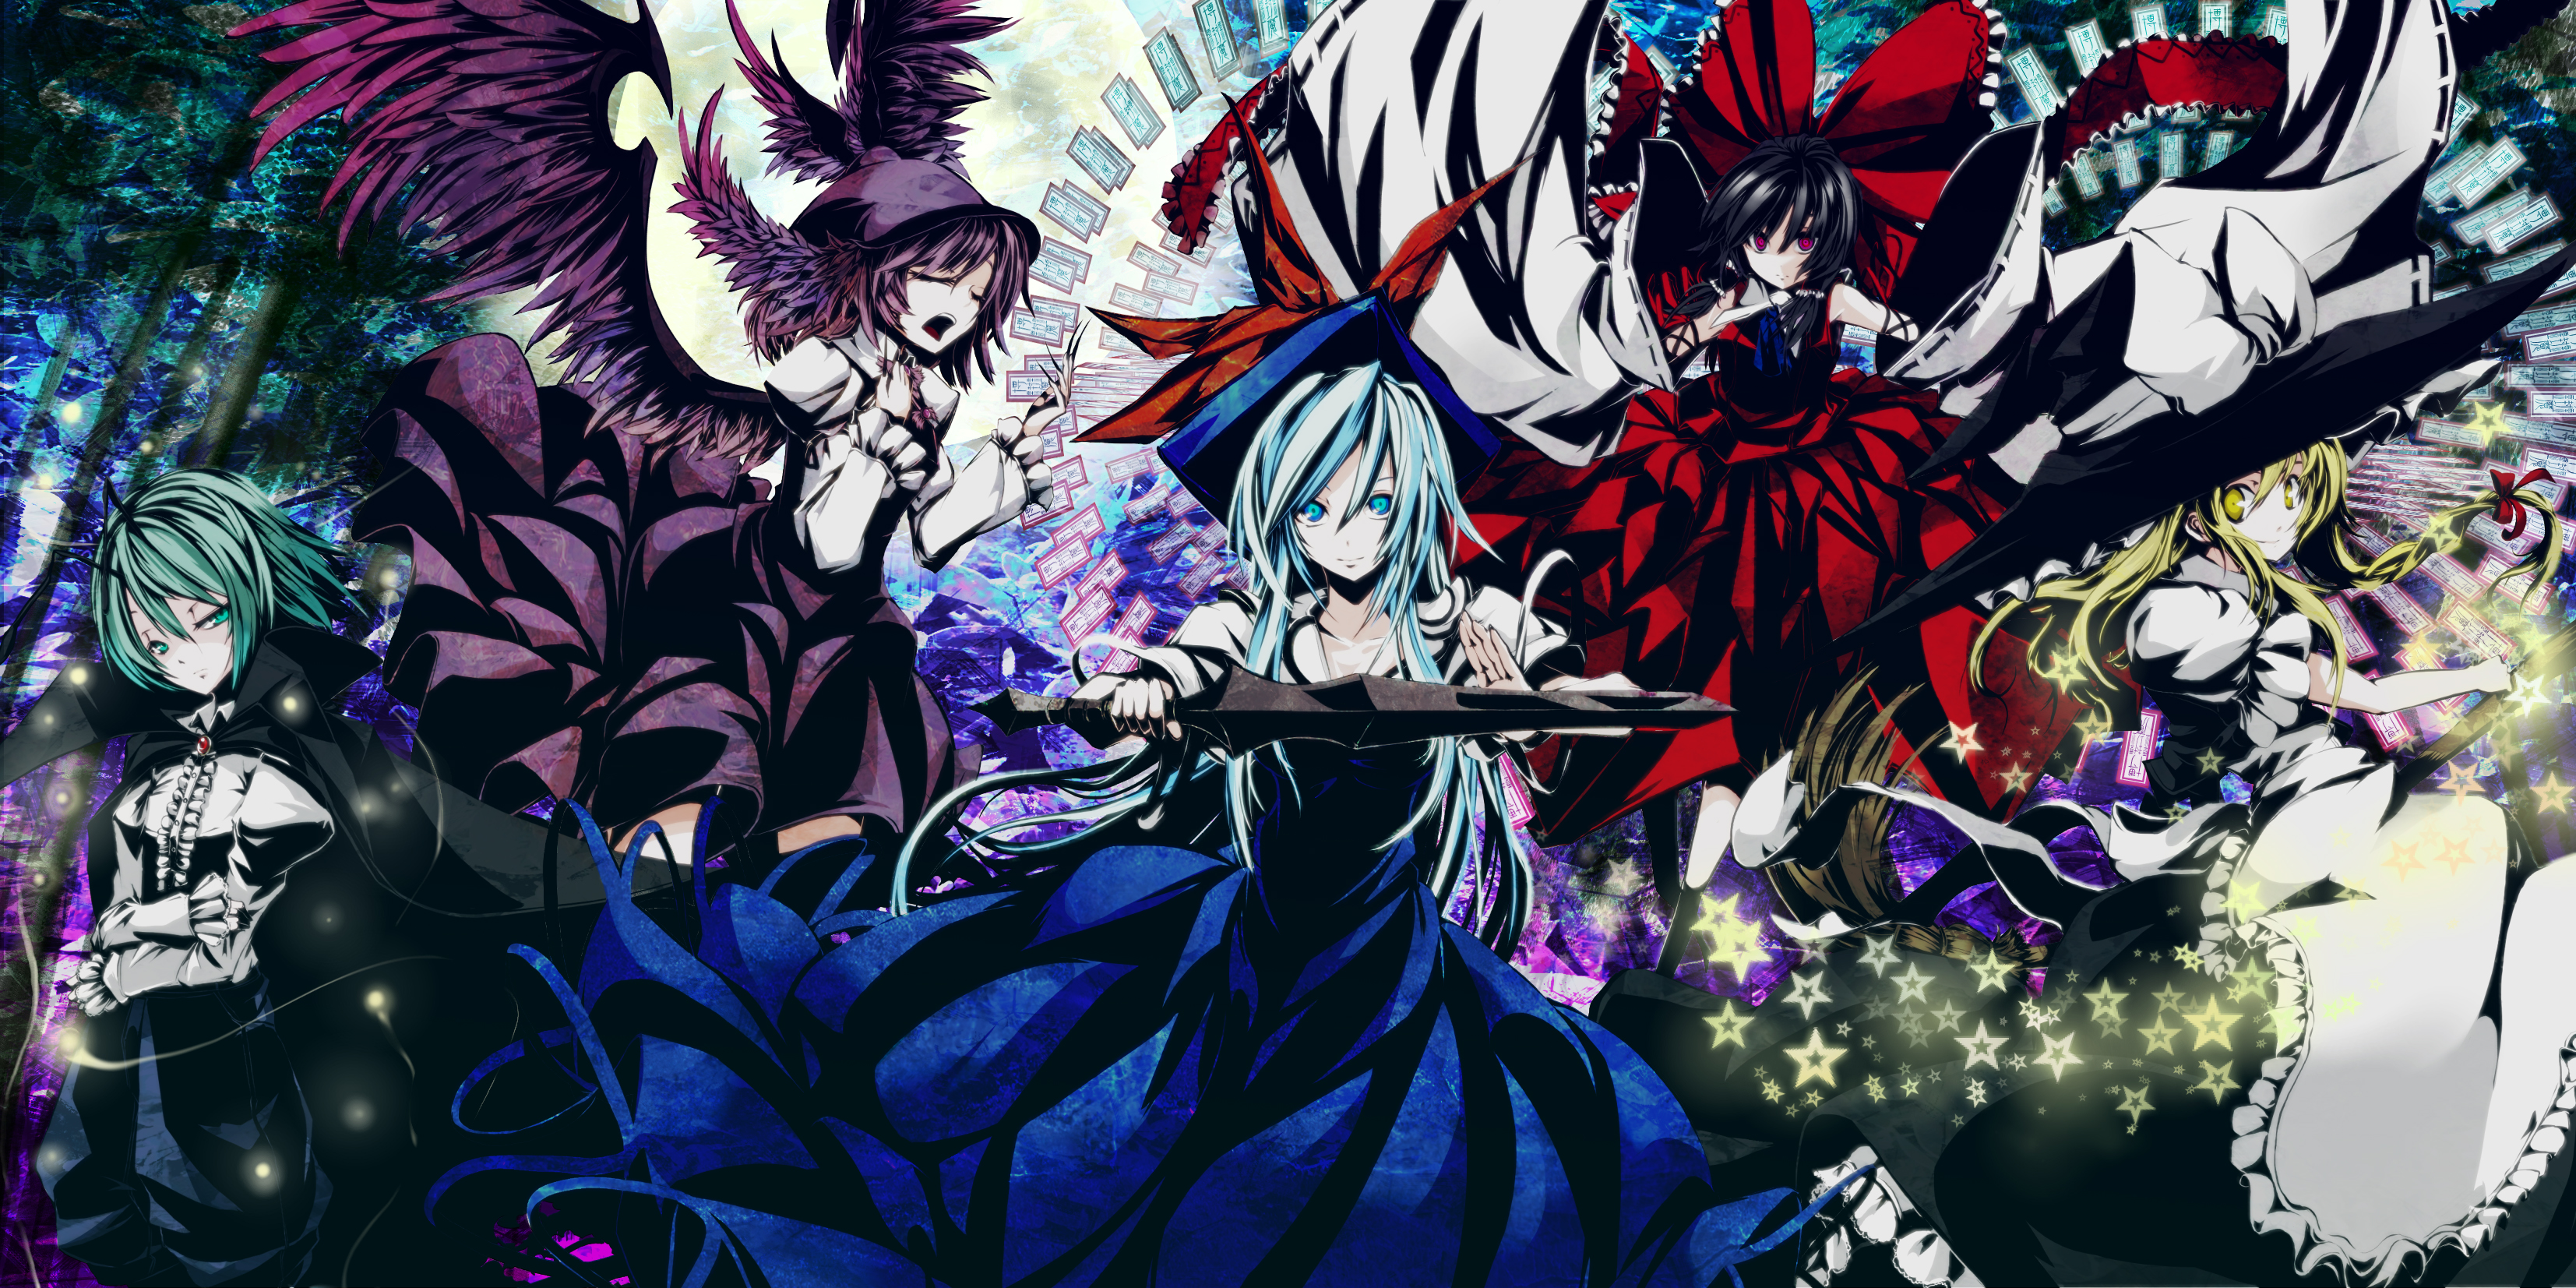 Anime desktop wallpaper featuring Reimu Hakurei, Marisa Kirisame, Mystia Lorelei, and Wriggle Nightbug from Touhou.